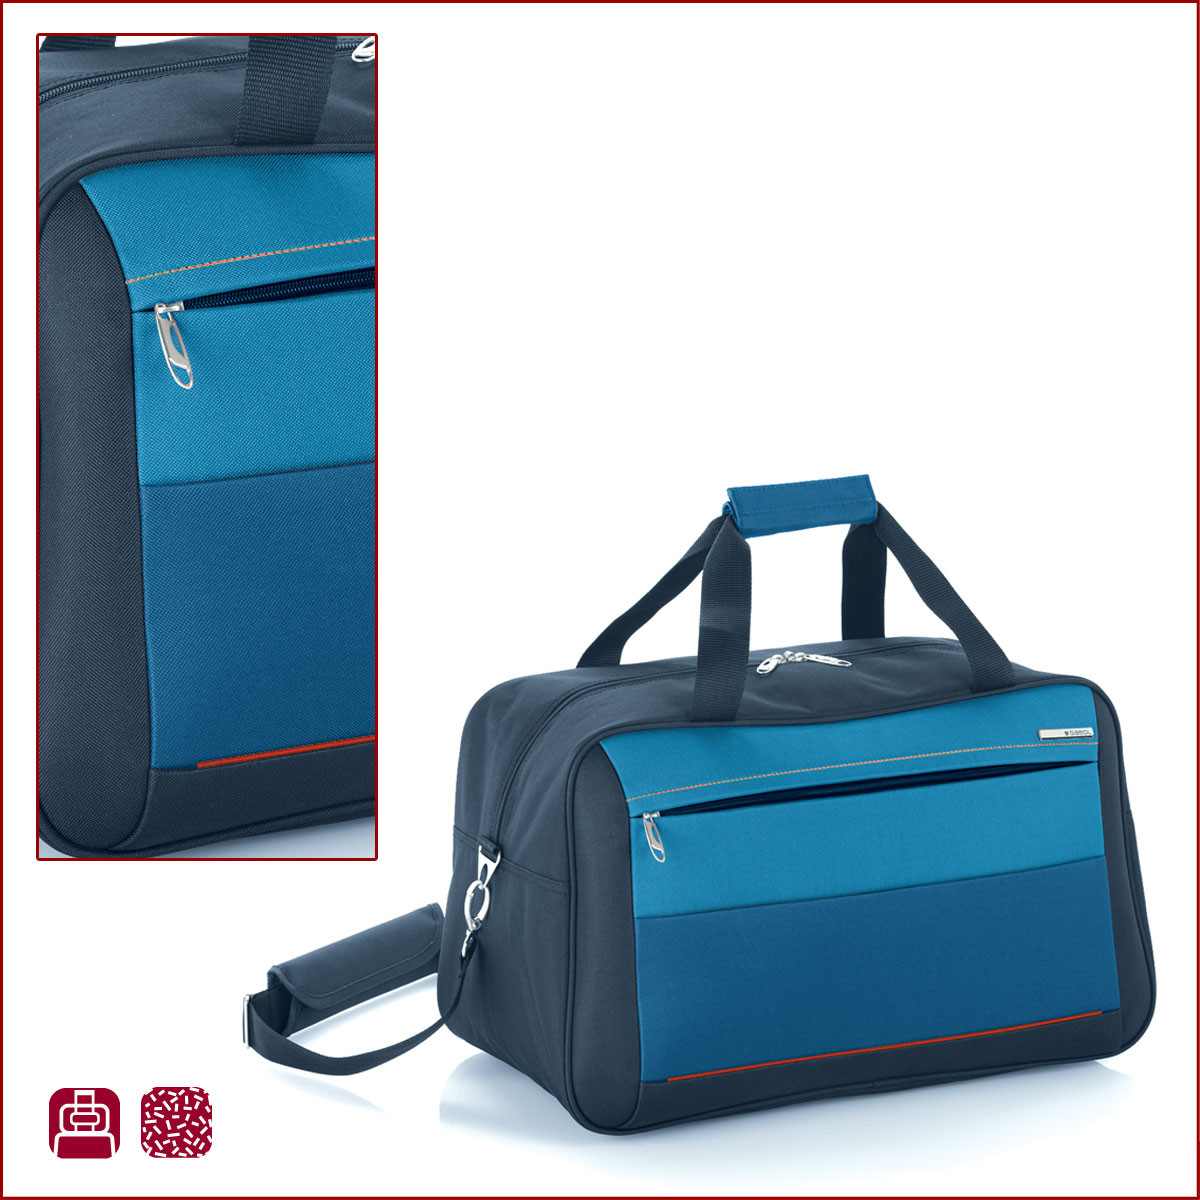 Gabol - Пътна чанта 50 см. синя - Reims - 11101003